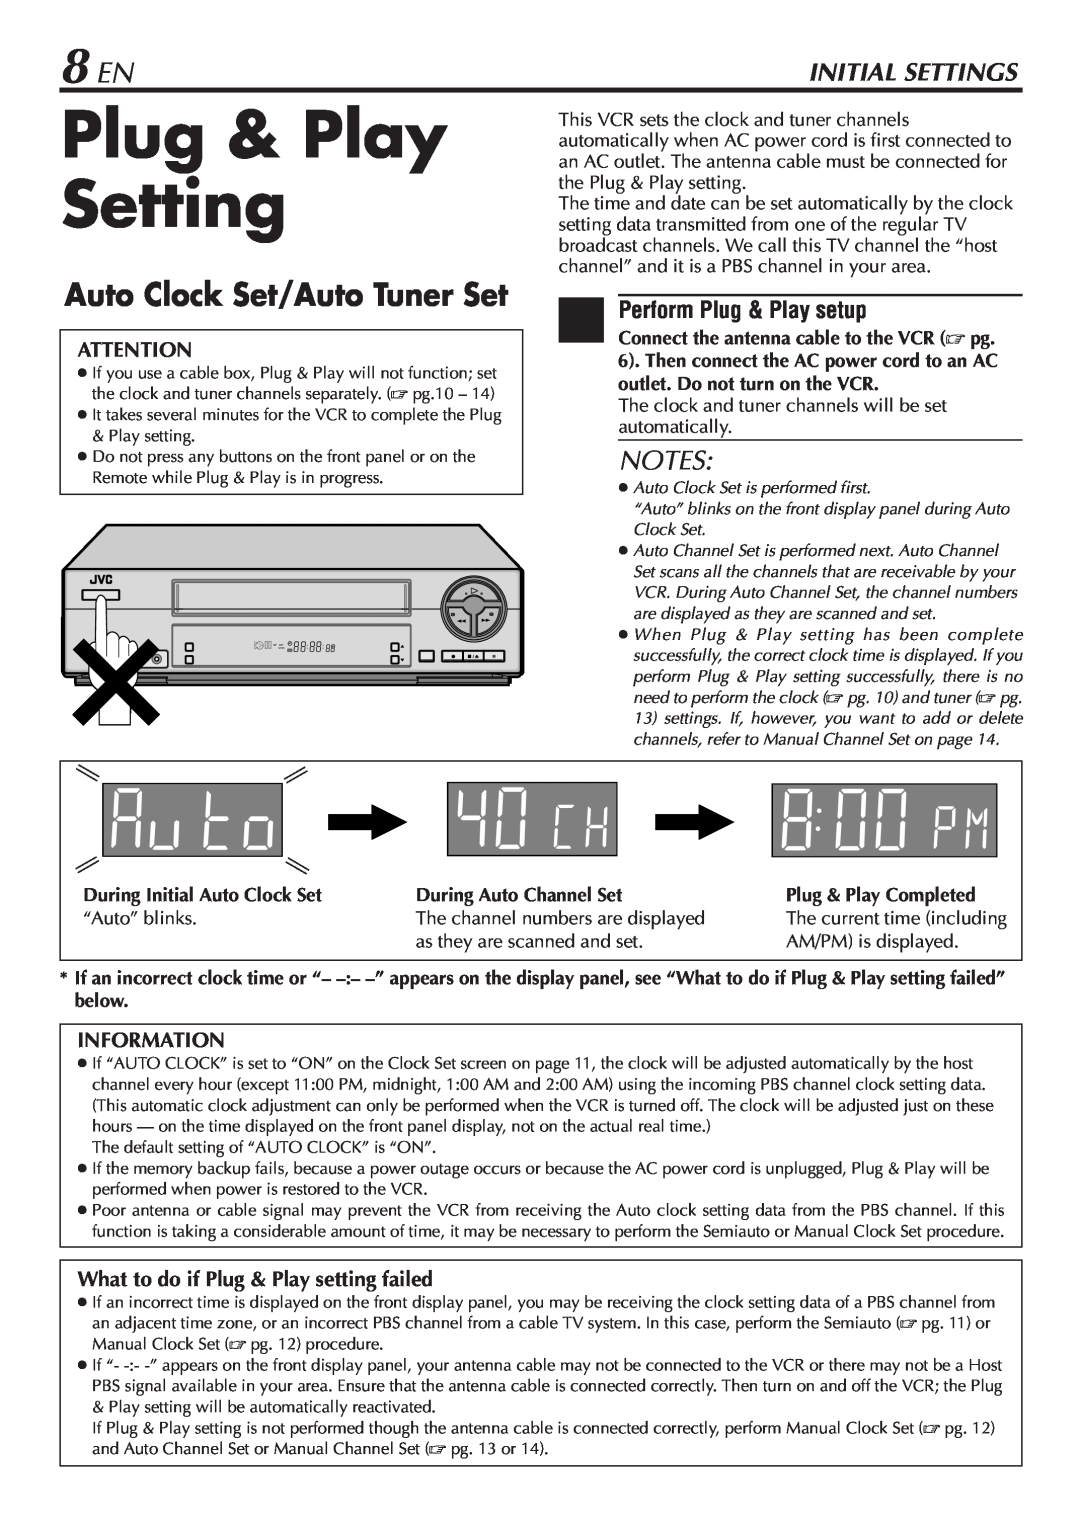 JVC HR-A47U manual Plug & Play Setting, 8 EN, Auto Clock Set/Auto Tuner Set, Initial Settings, 1Perform Plug & Play setup 